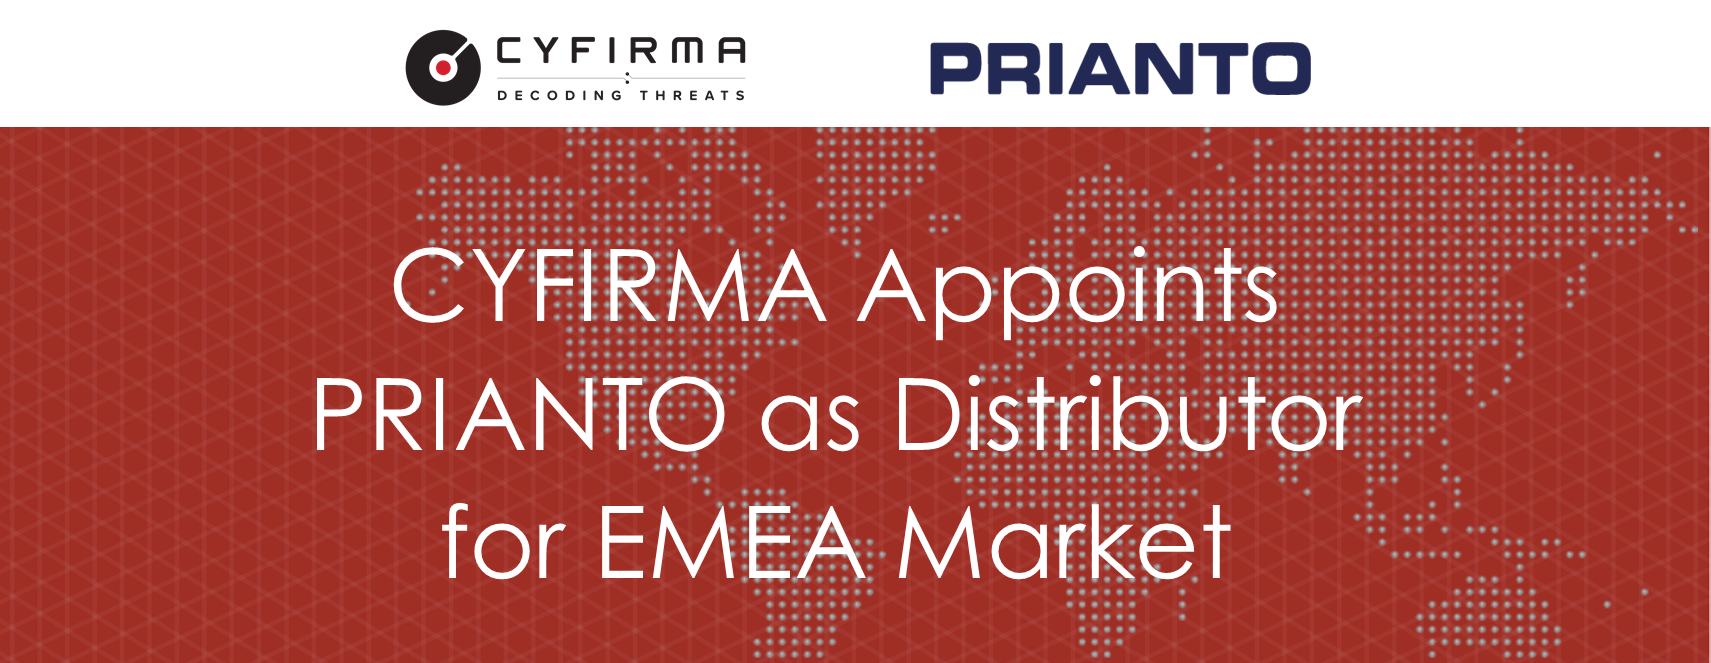 CYFIRMA Appoints PRIANTO as Distributor for EMEA Market